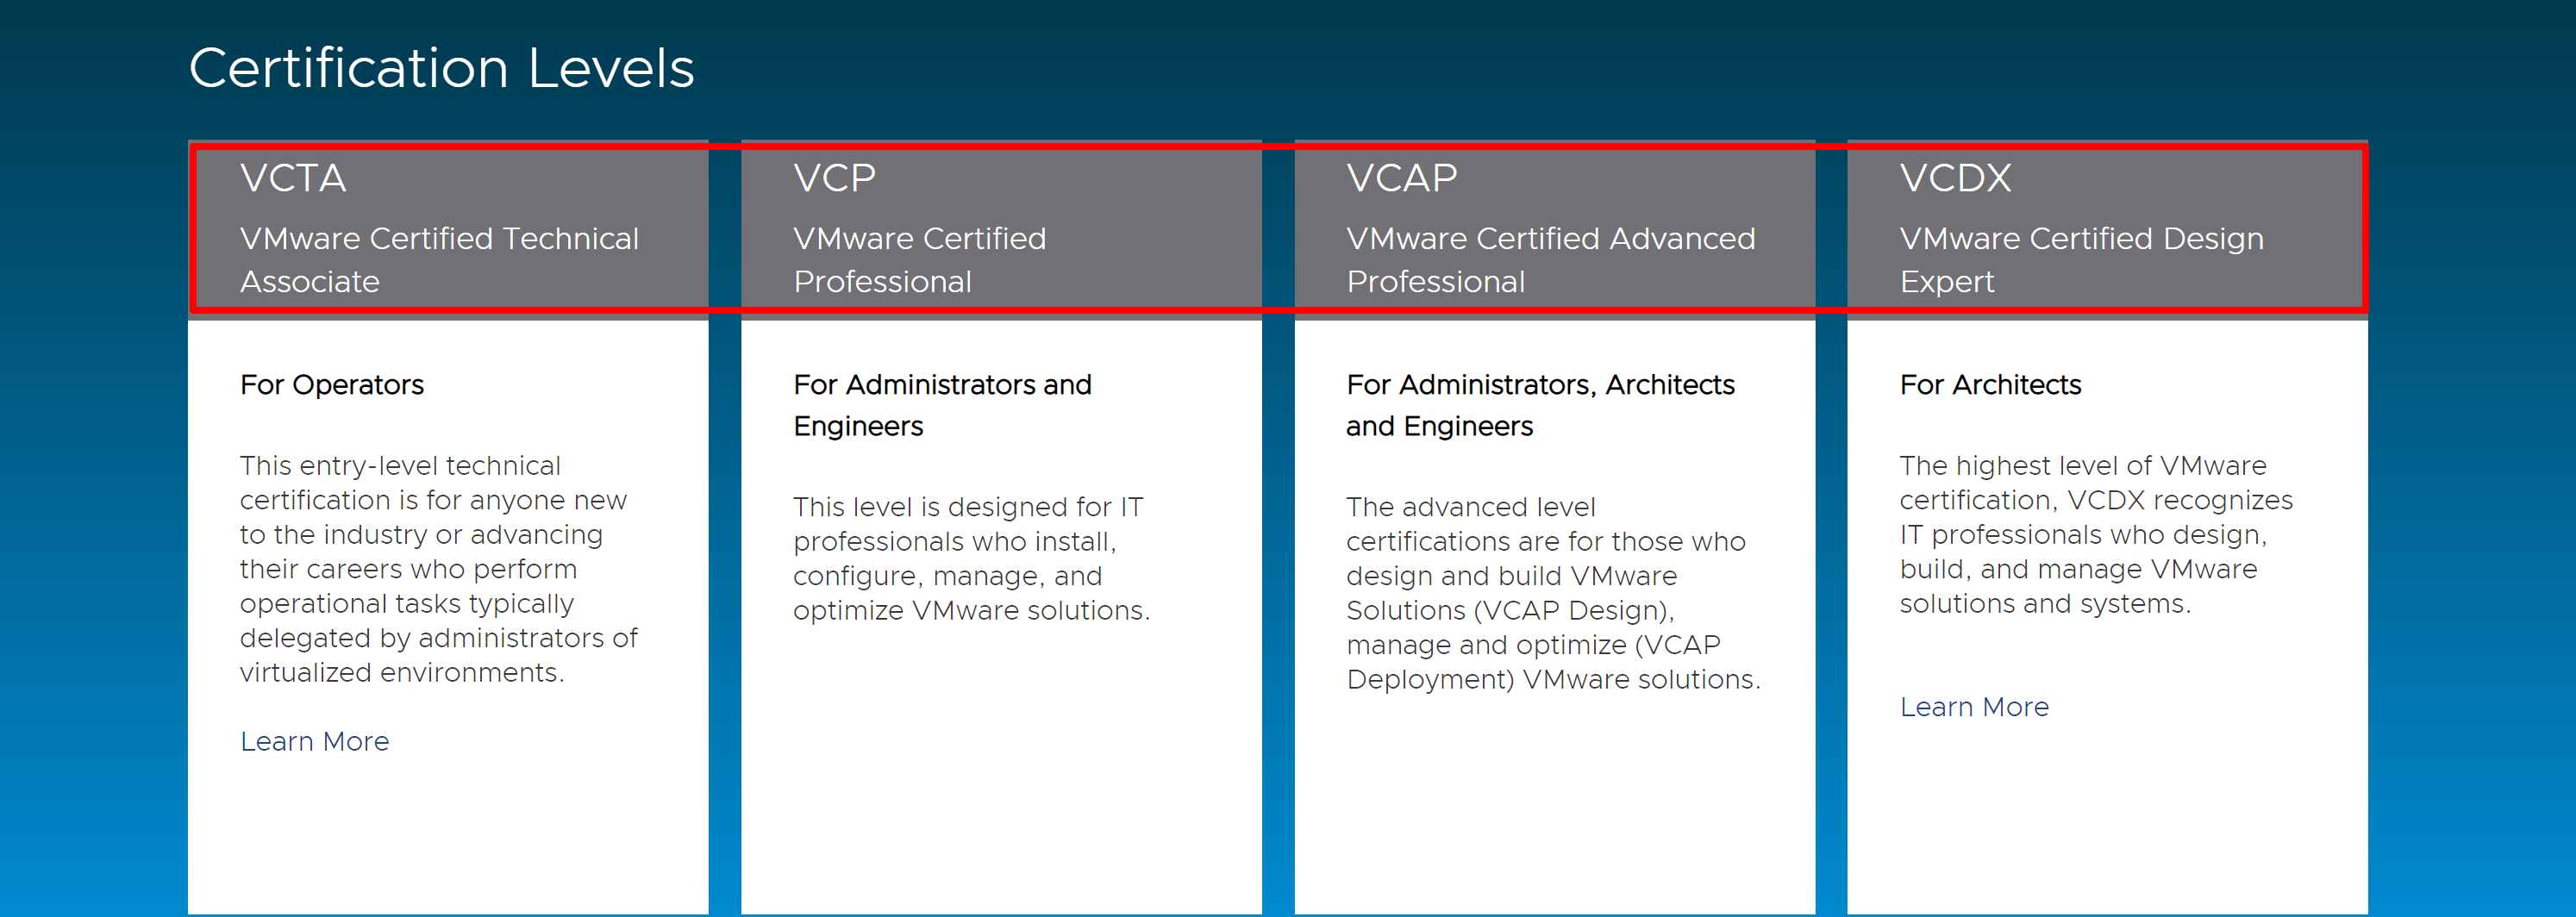 VMware ceretification levels- VMWare pricing